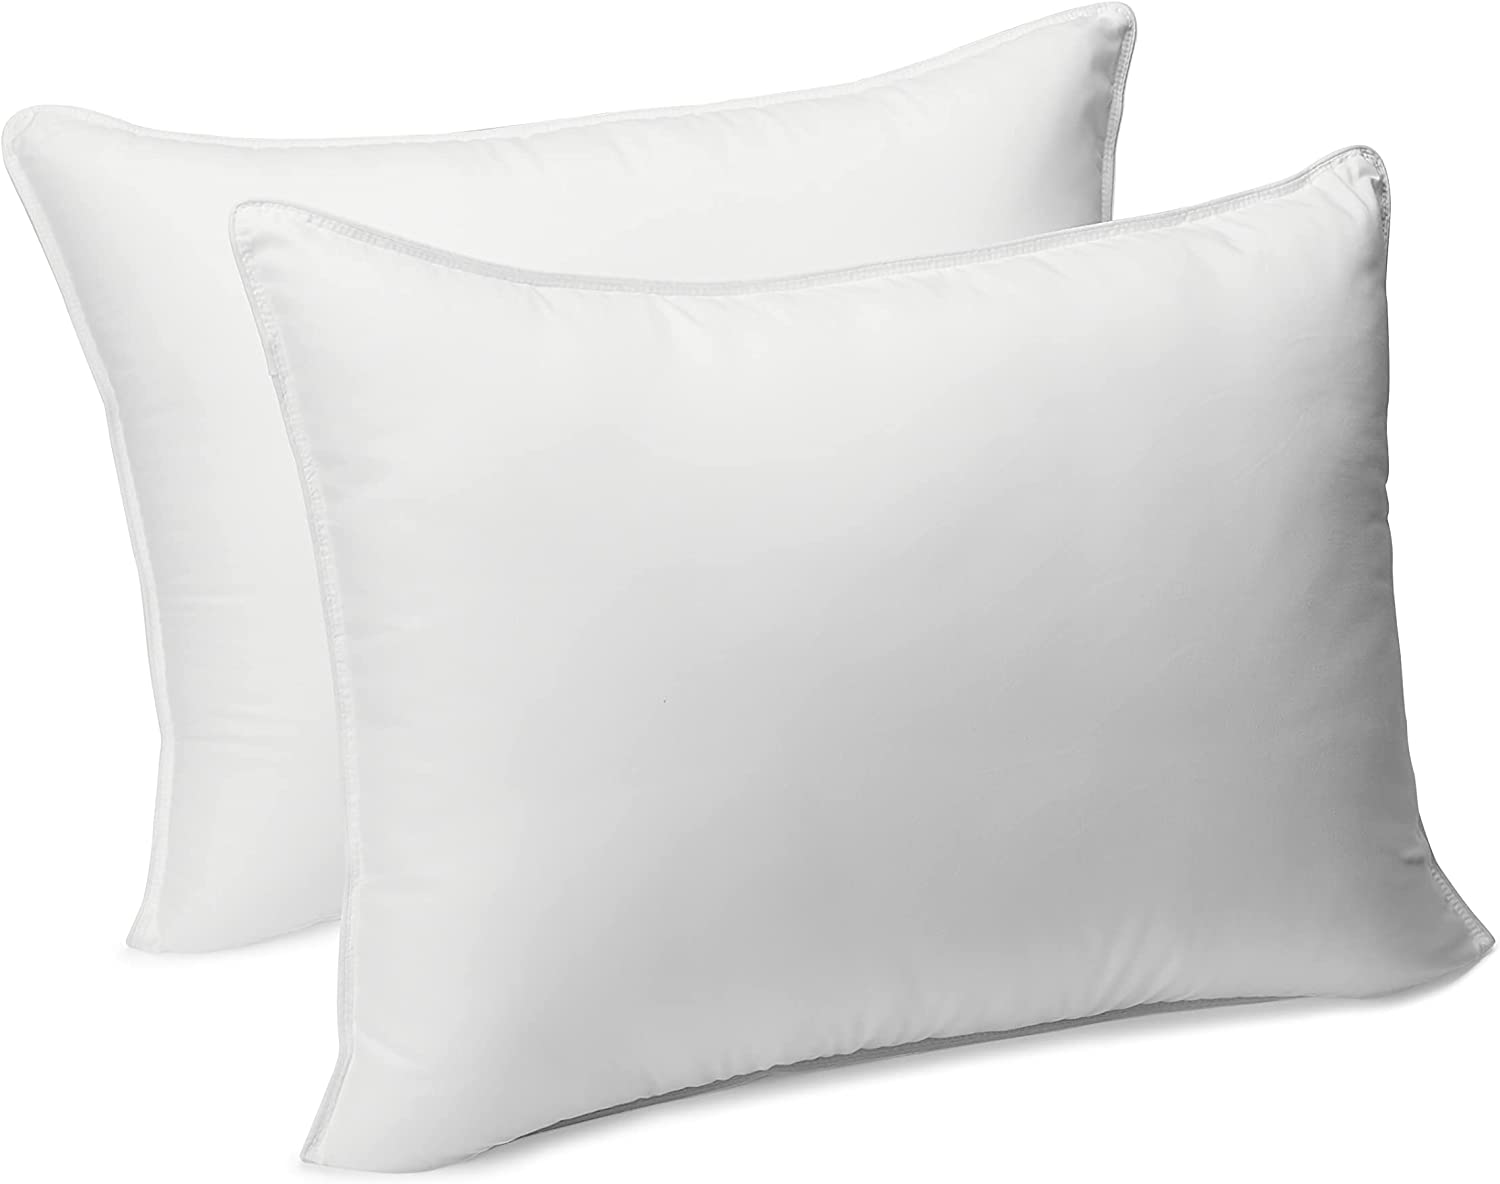 Amazon Basics Down Alternative Pillows